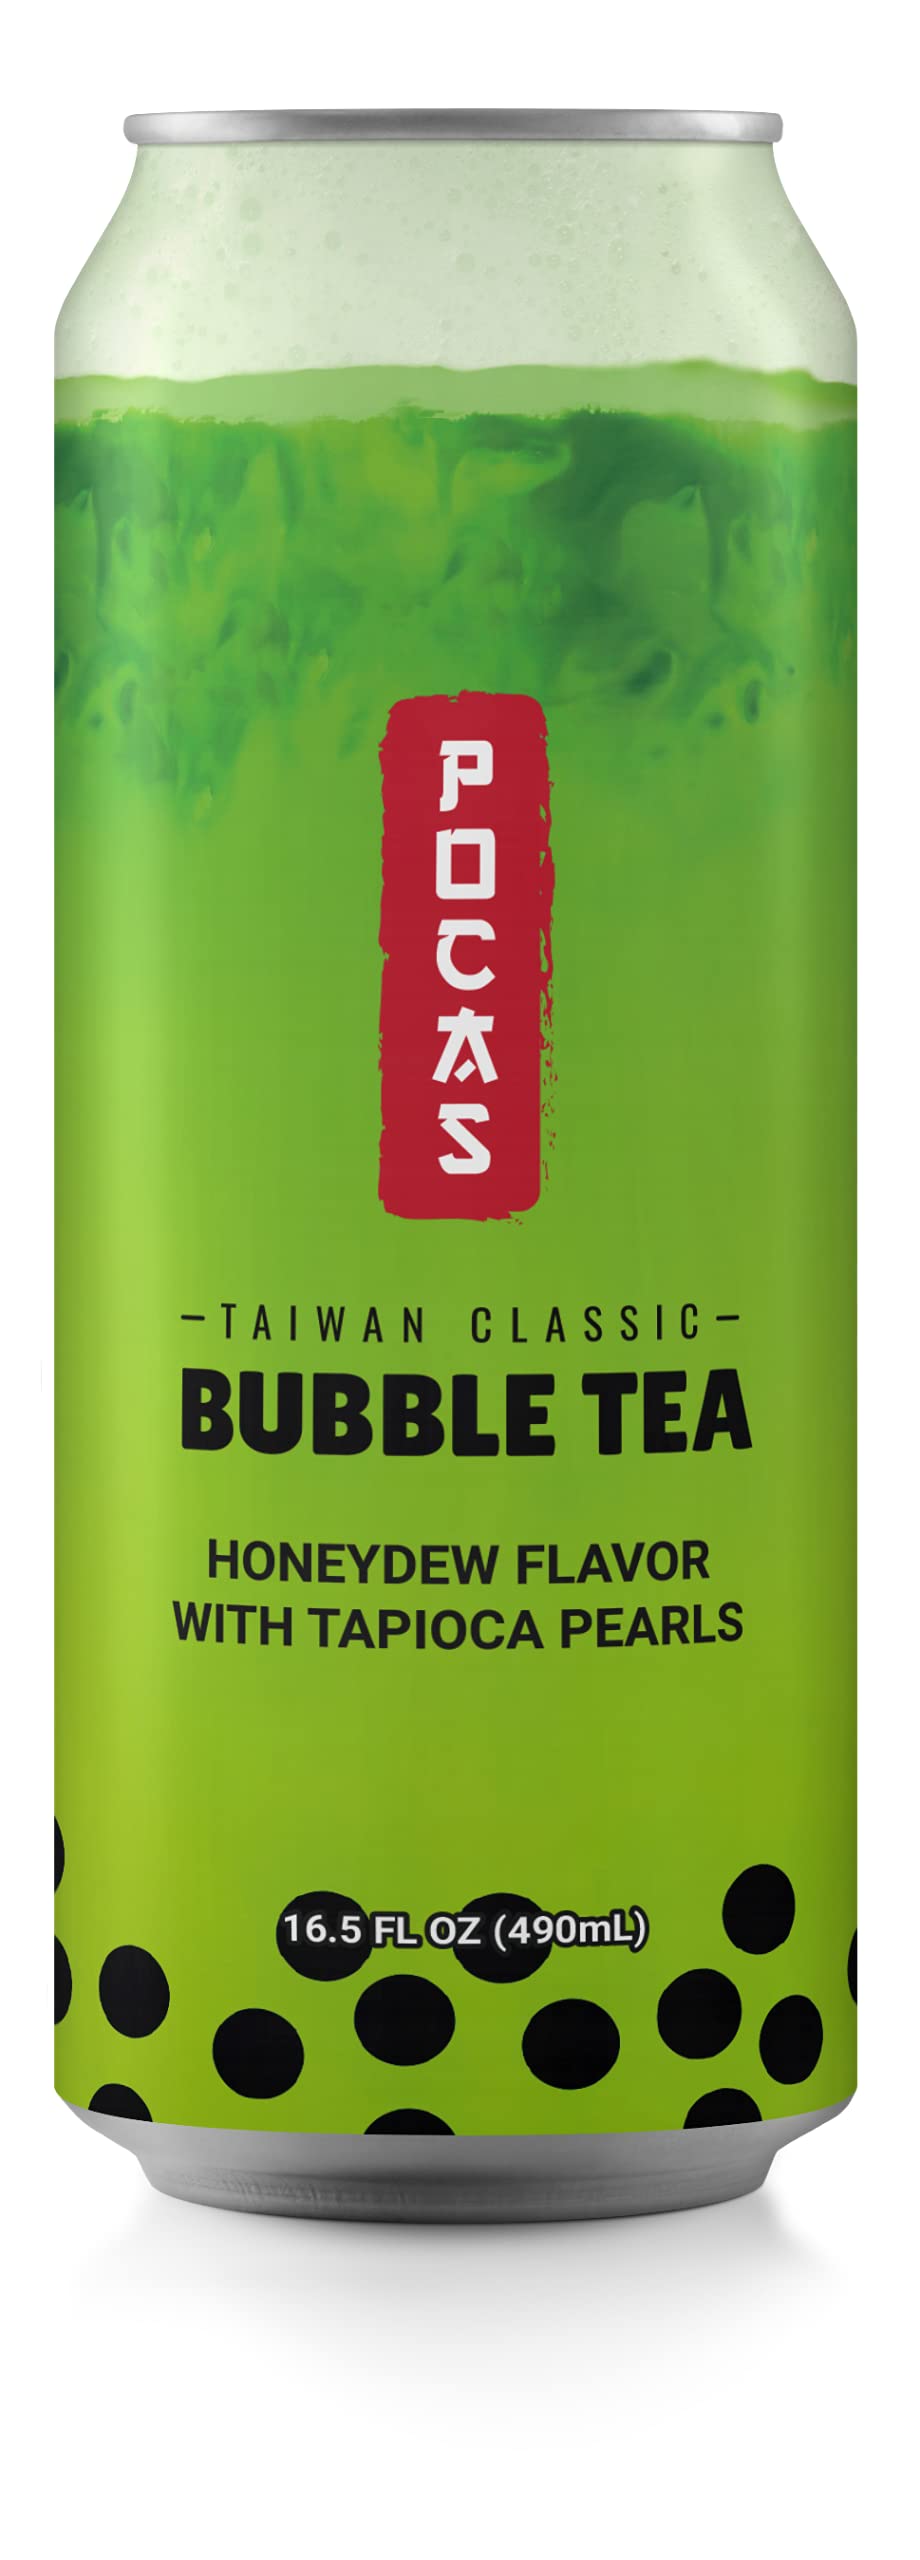 Pocas Bubble Tea with Tapioca Pearls, Honeydew Refreshing Milk Tea with Boba Pearls